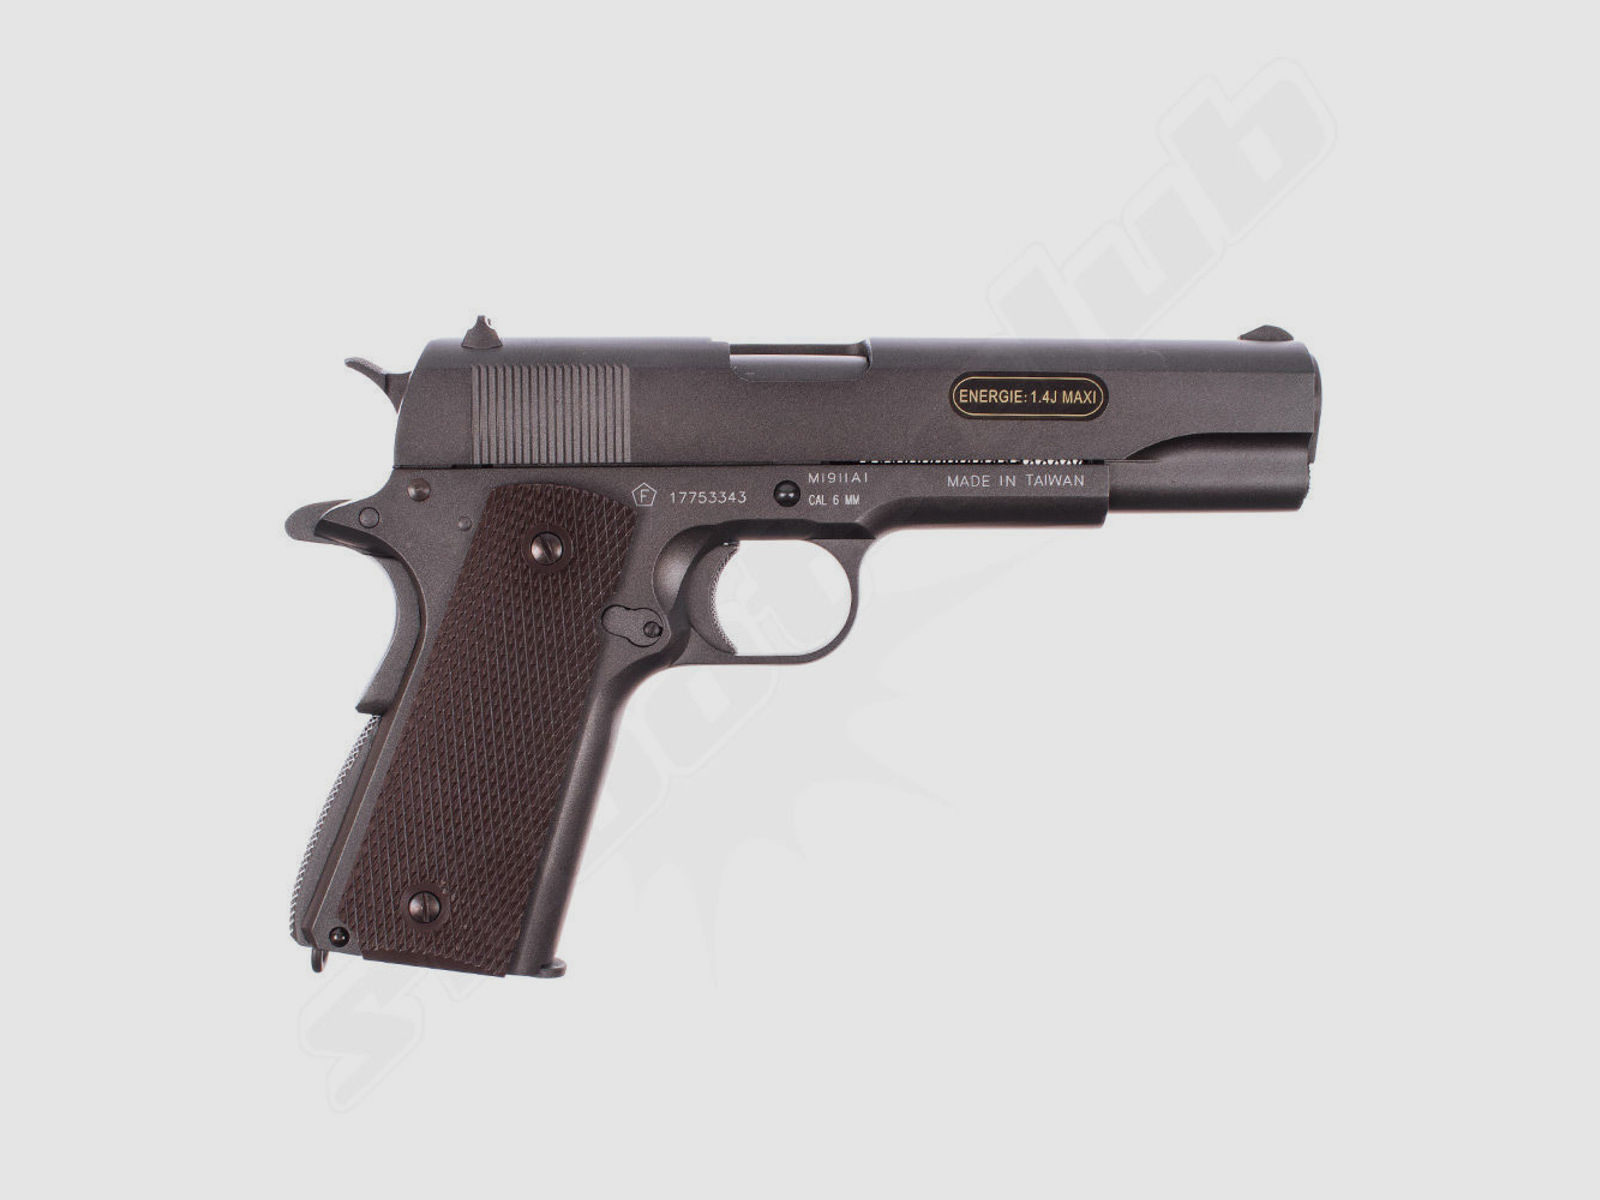 KWC Colt 1911A1 Airsoft CO2 GBB Pistole ab18 - Schwarz